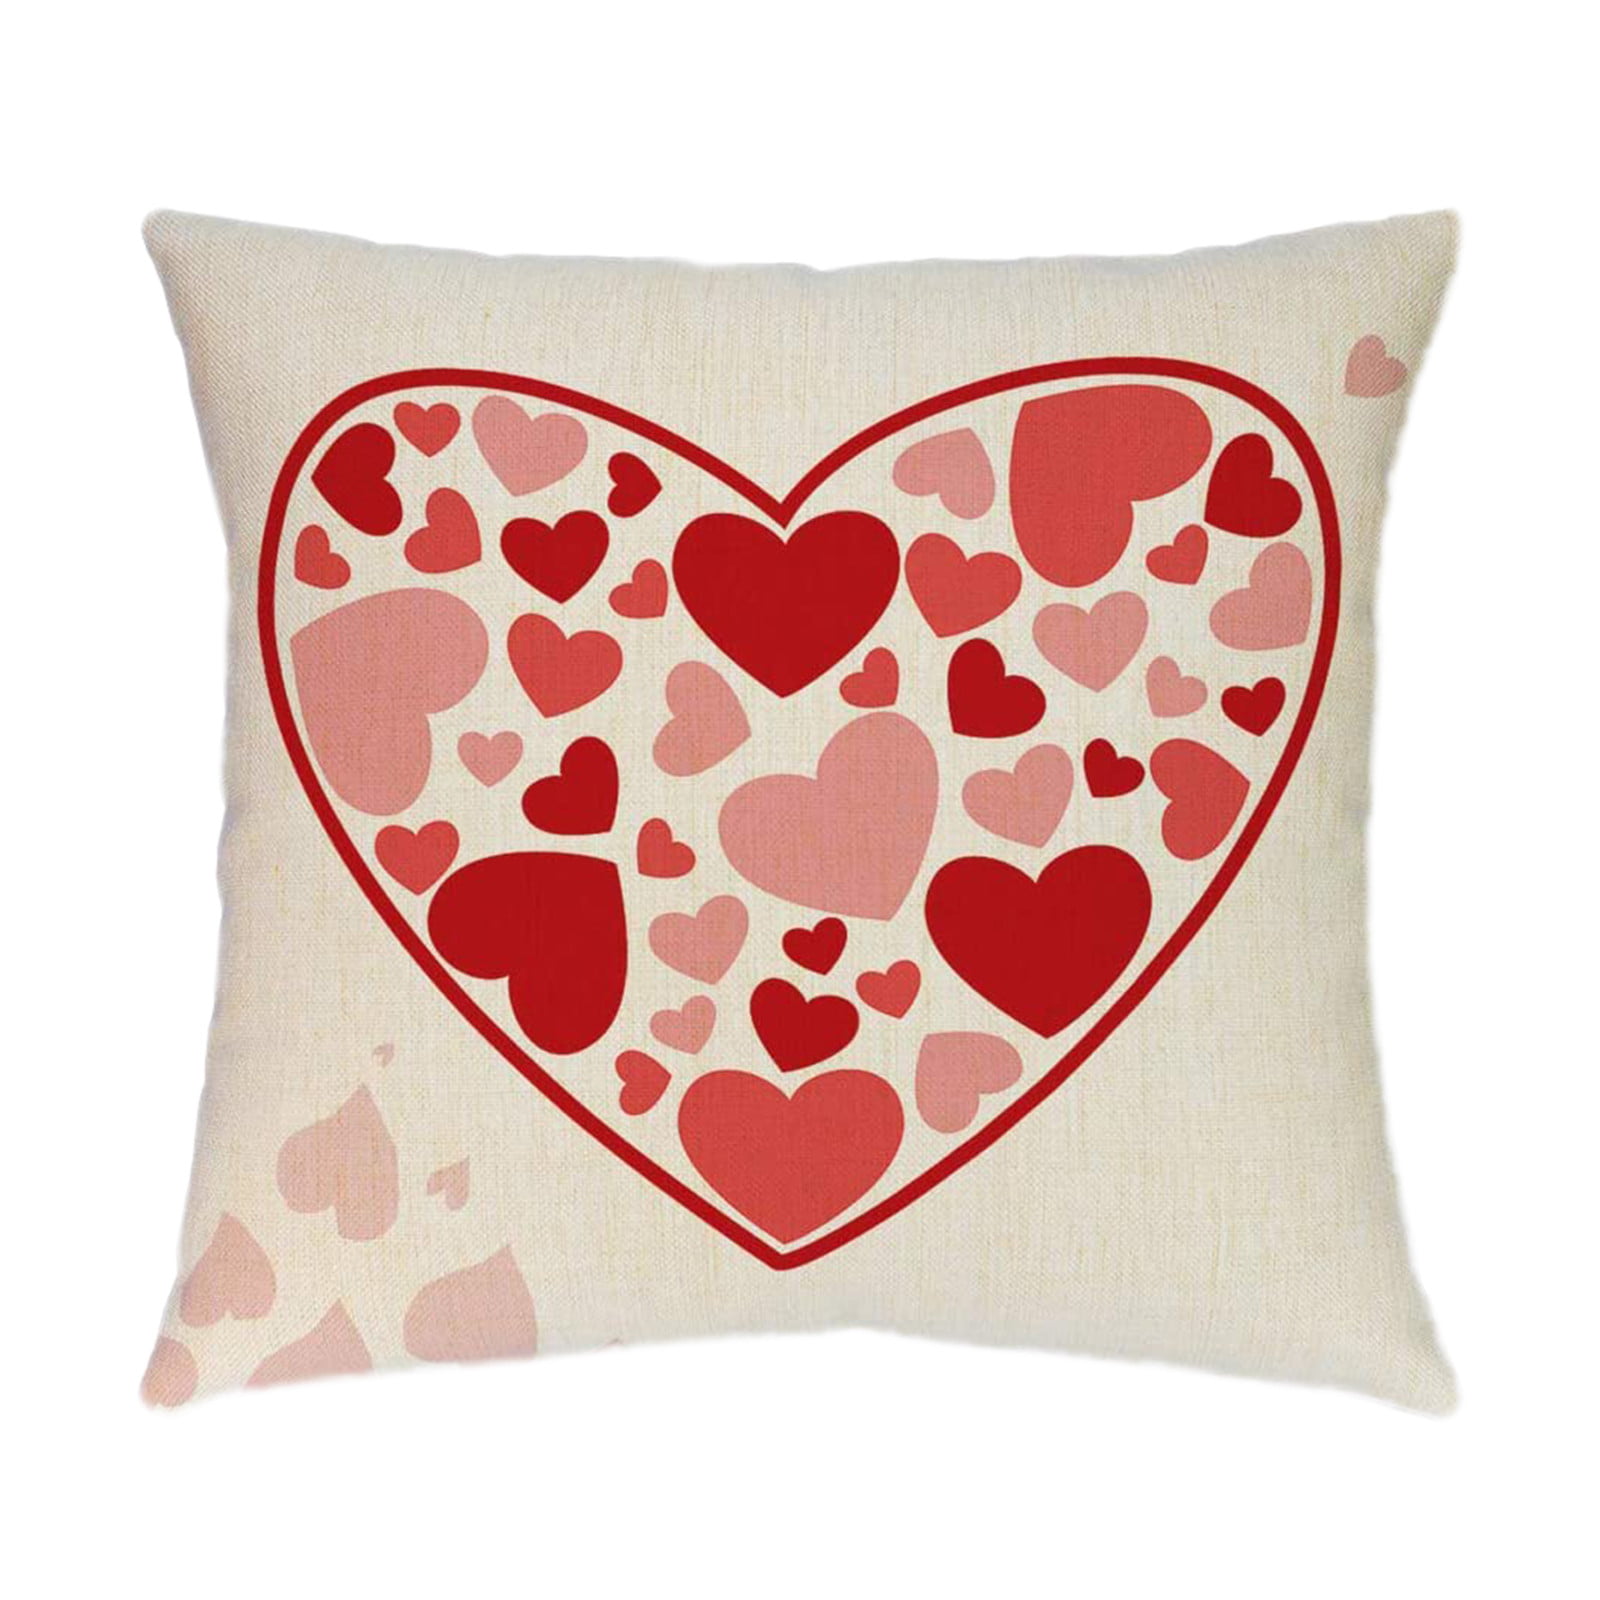 Flamingo Cotton Linen Pillow Case Throw Cushion Cover Valentine's Day Home Decor 